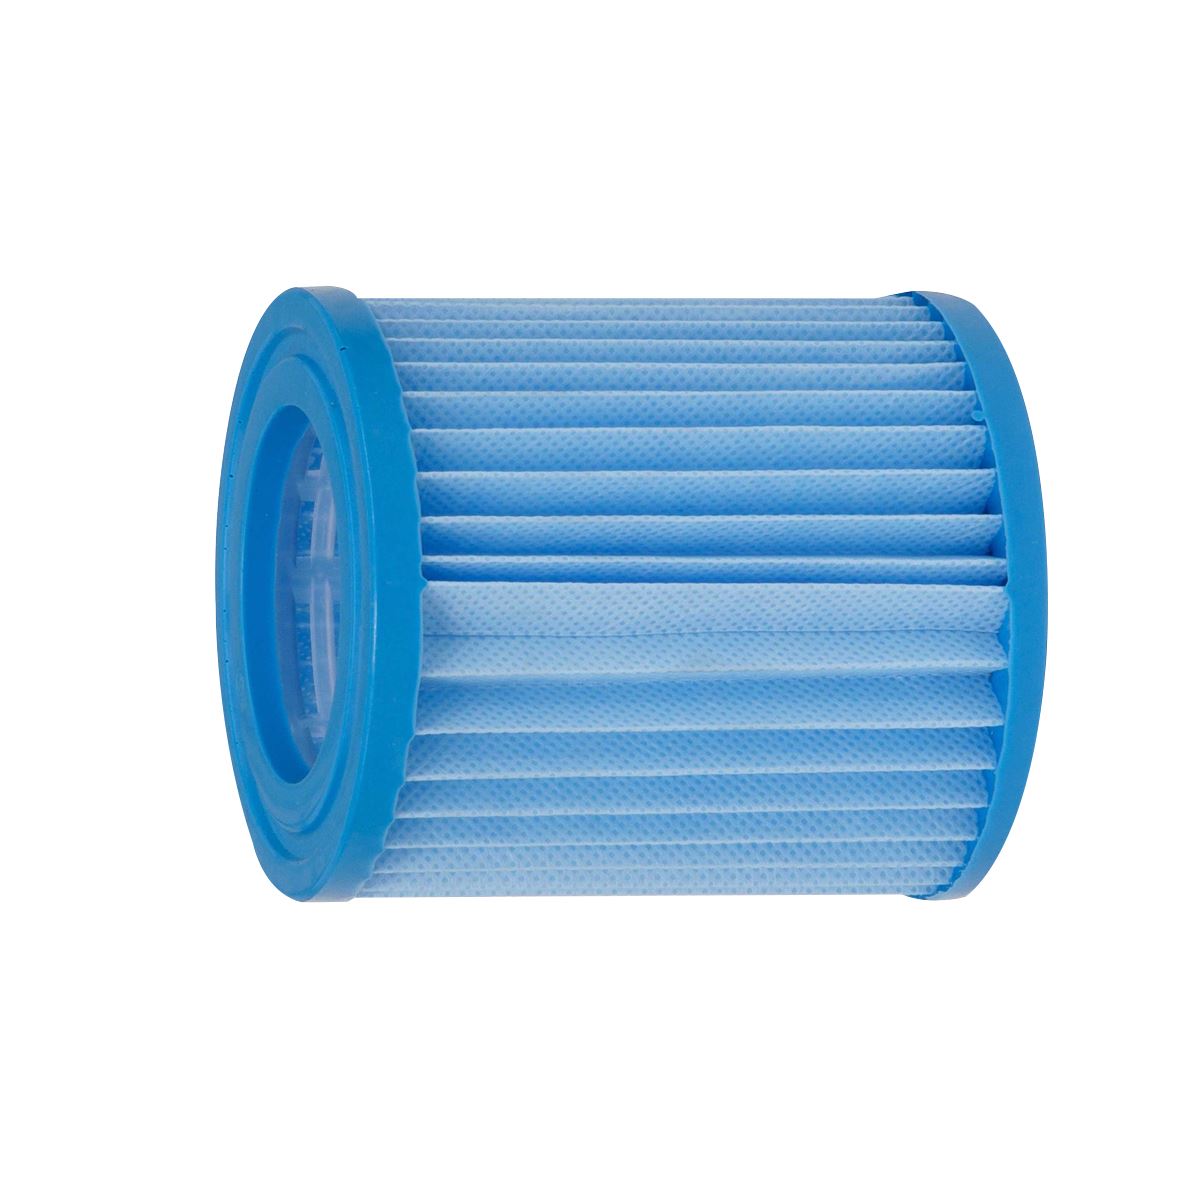 Dellonda Swimming Pool Antimicrobial Filter Cartridge - DL38